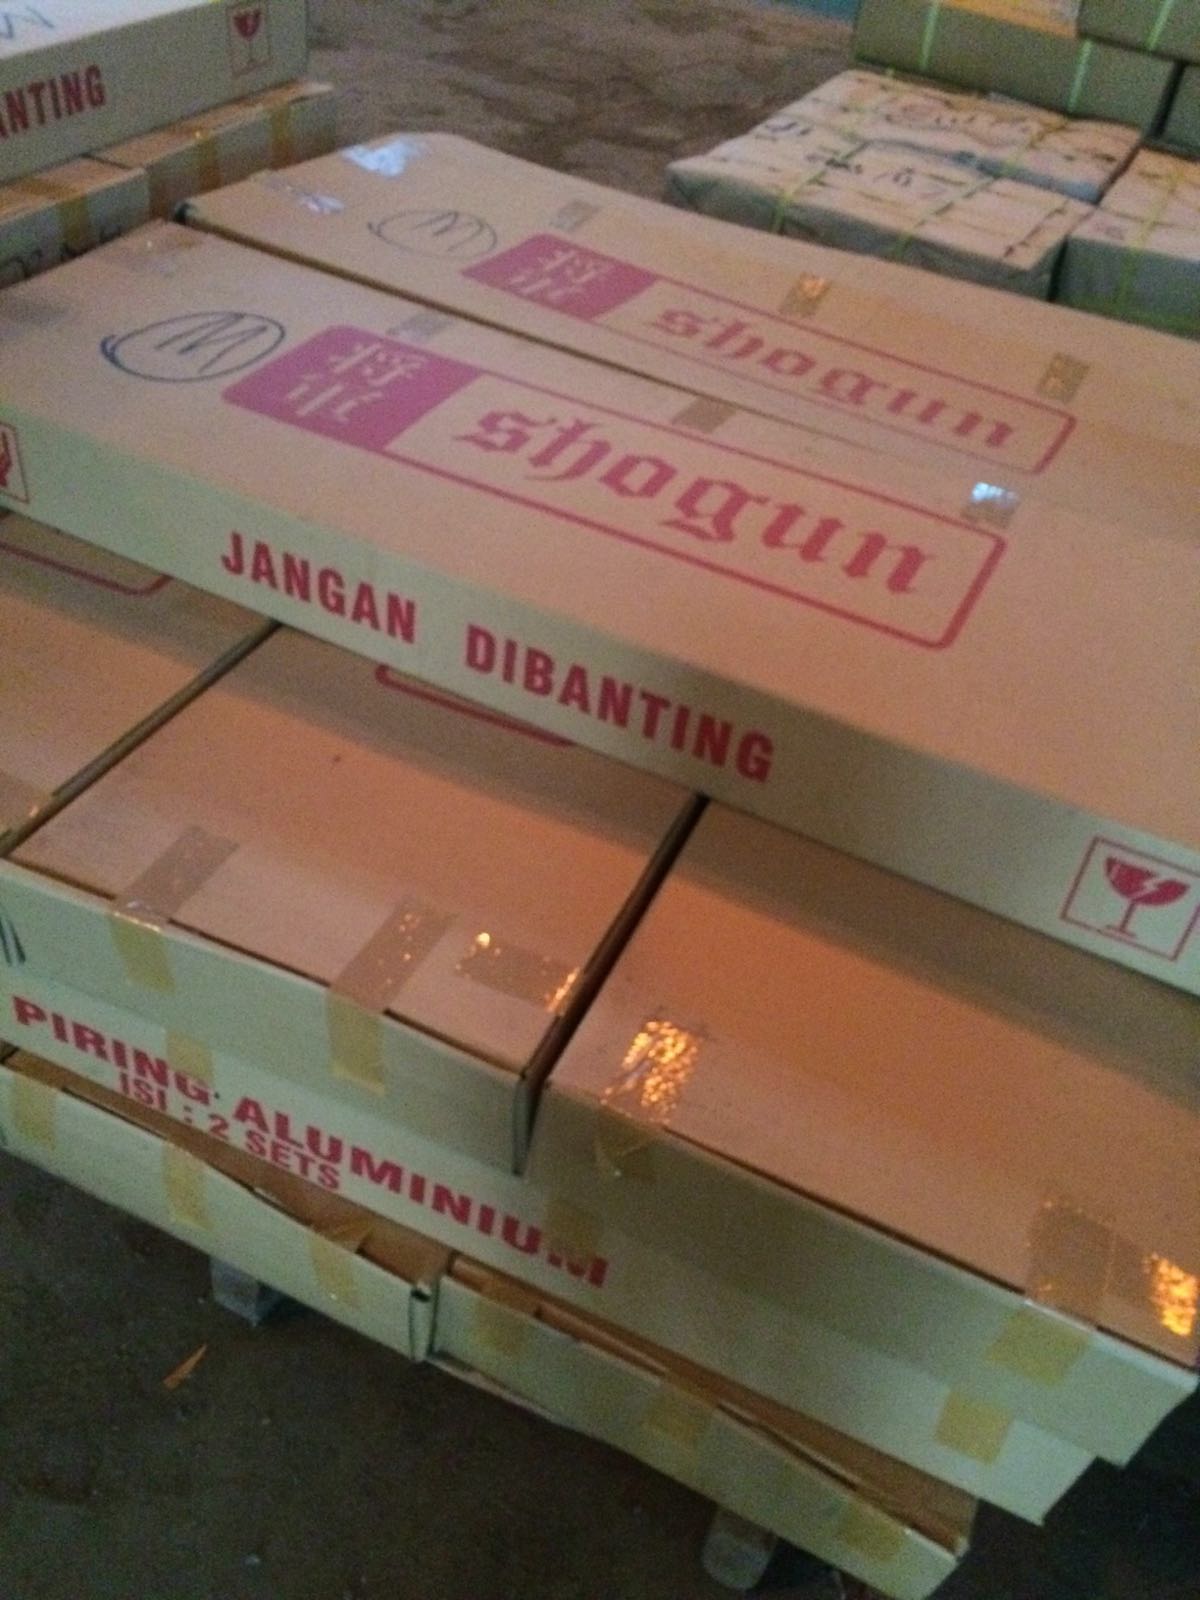 Selatan Jaya distributor barang plastik furnitur Surabaya 